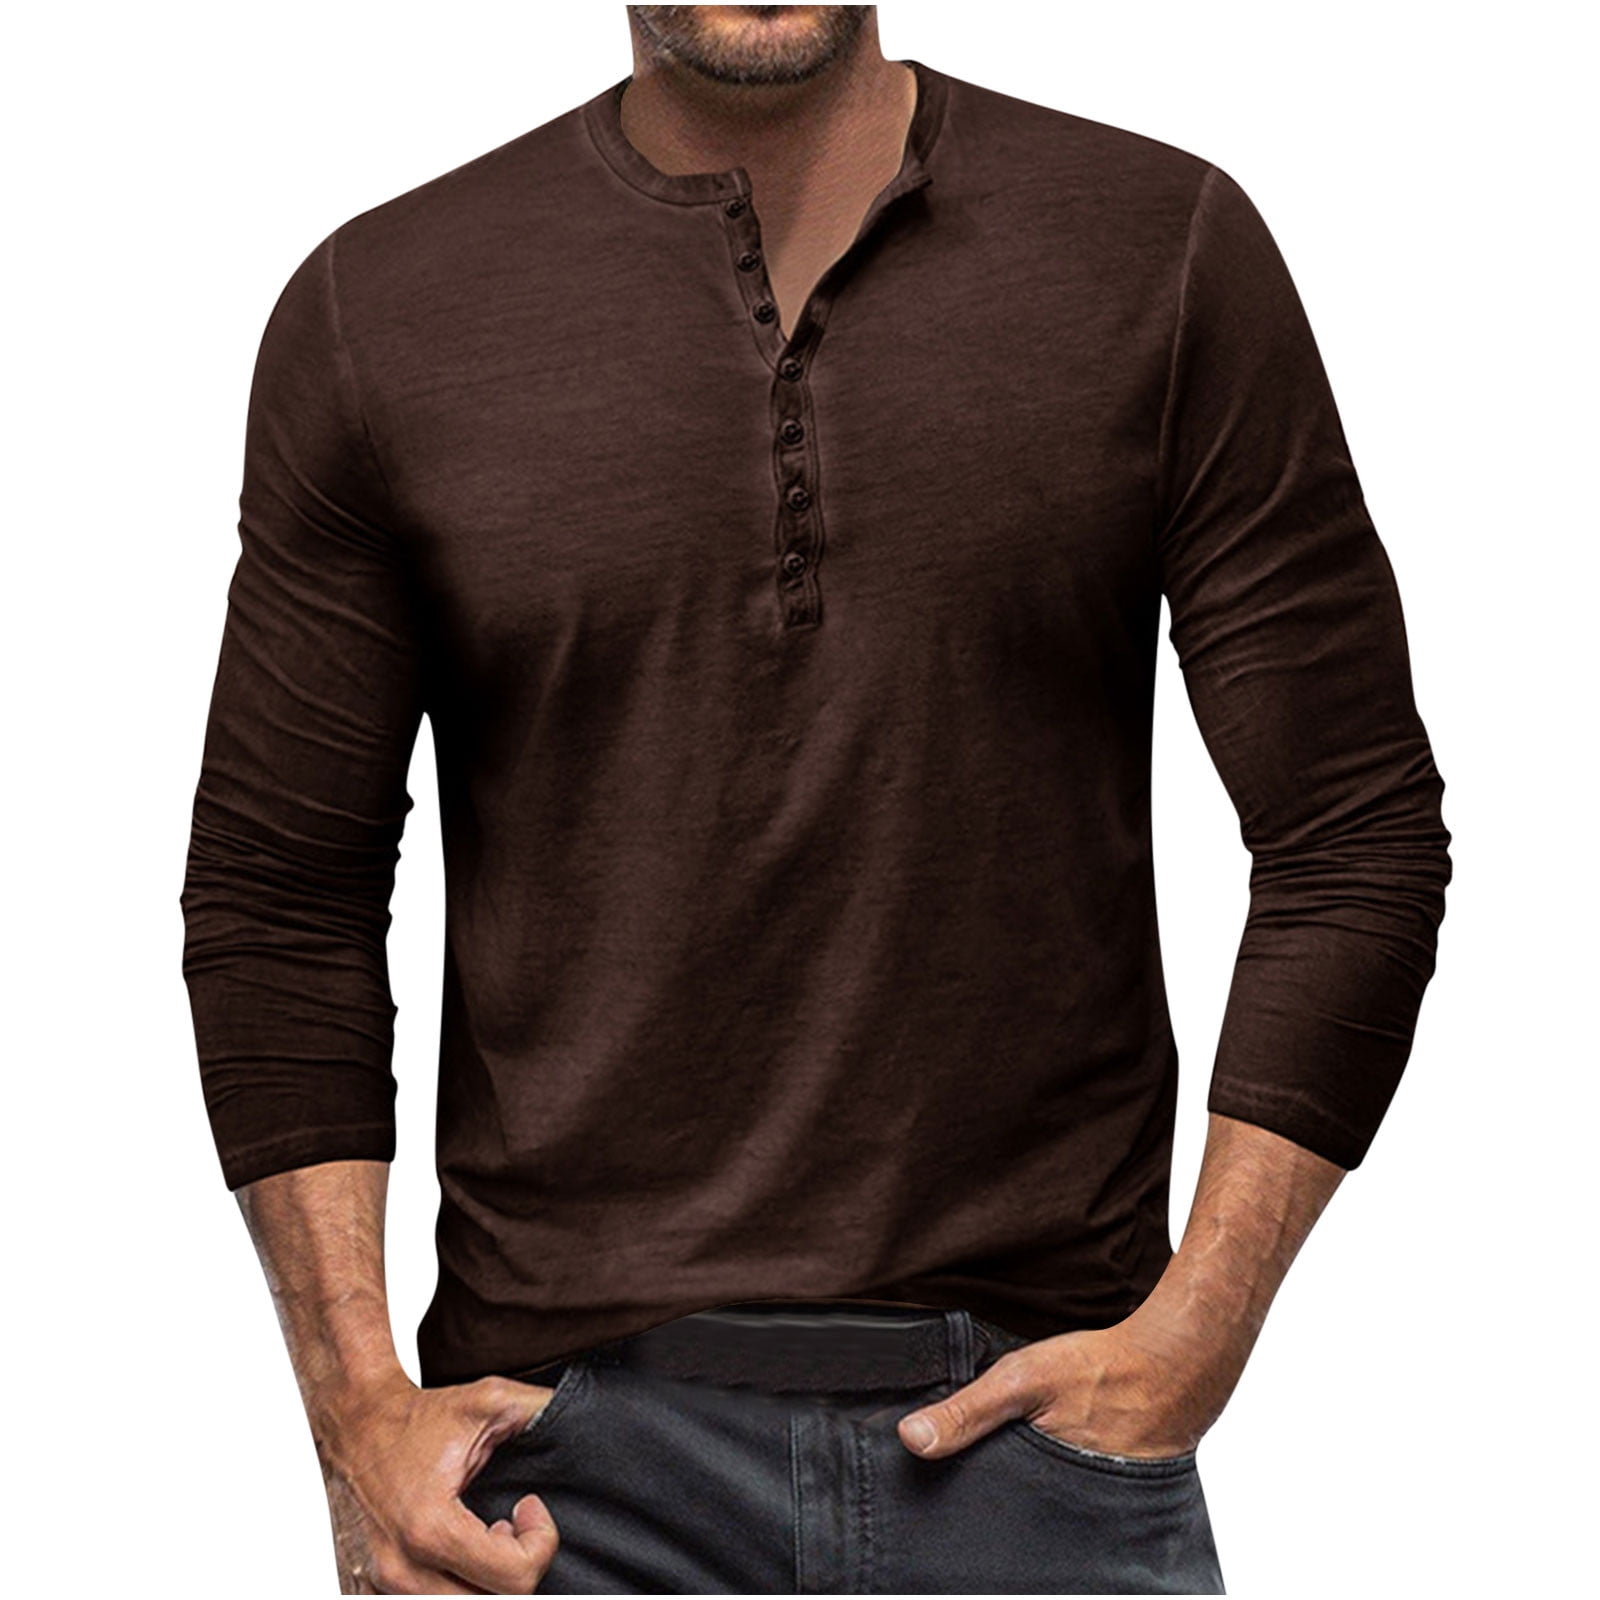 RYRJJ Mens Henley Shirts Long Sleeve T Shirt Fashion Casual Slim Fit  Lightweight Basic Plain Pullover Tee Shirts(Dark Gray,3XL)